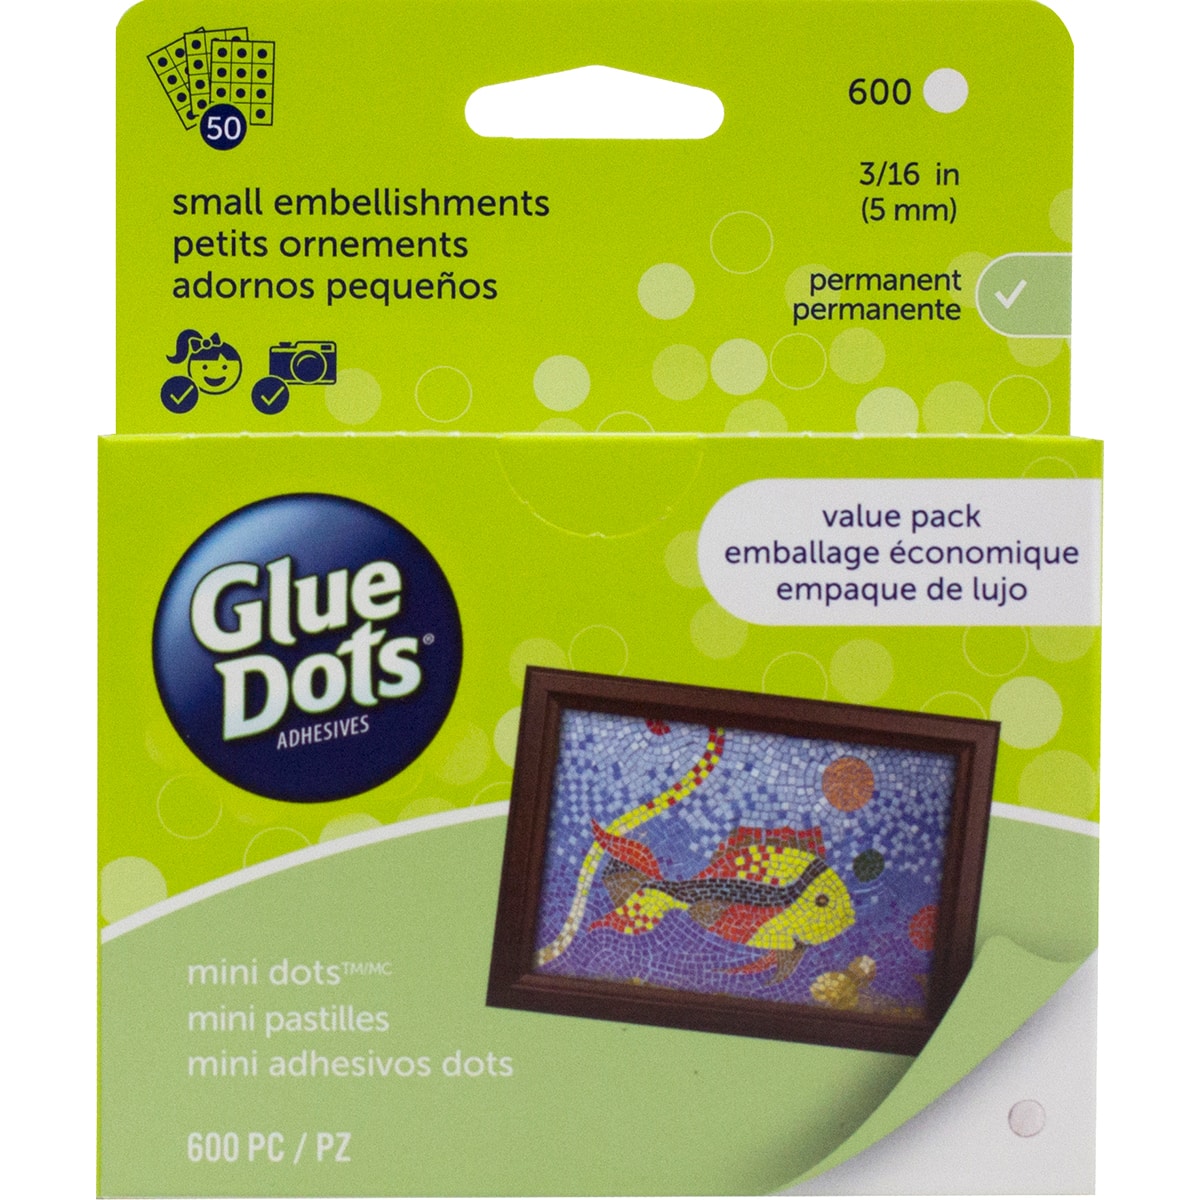 Glue Dots .1875 Mini Dot Sheets Value Pack-600 Clear Dots